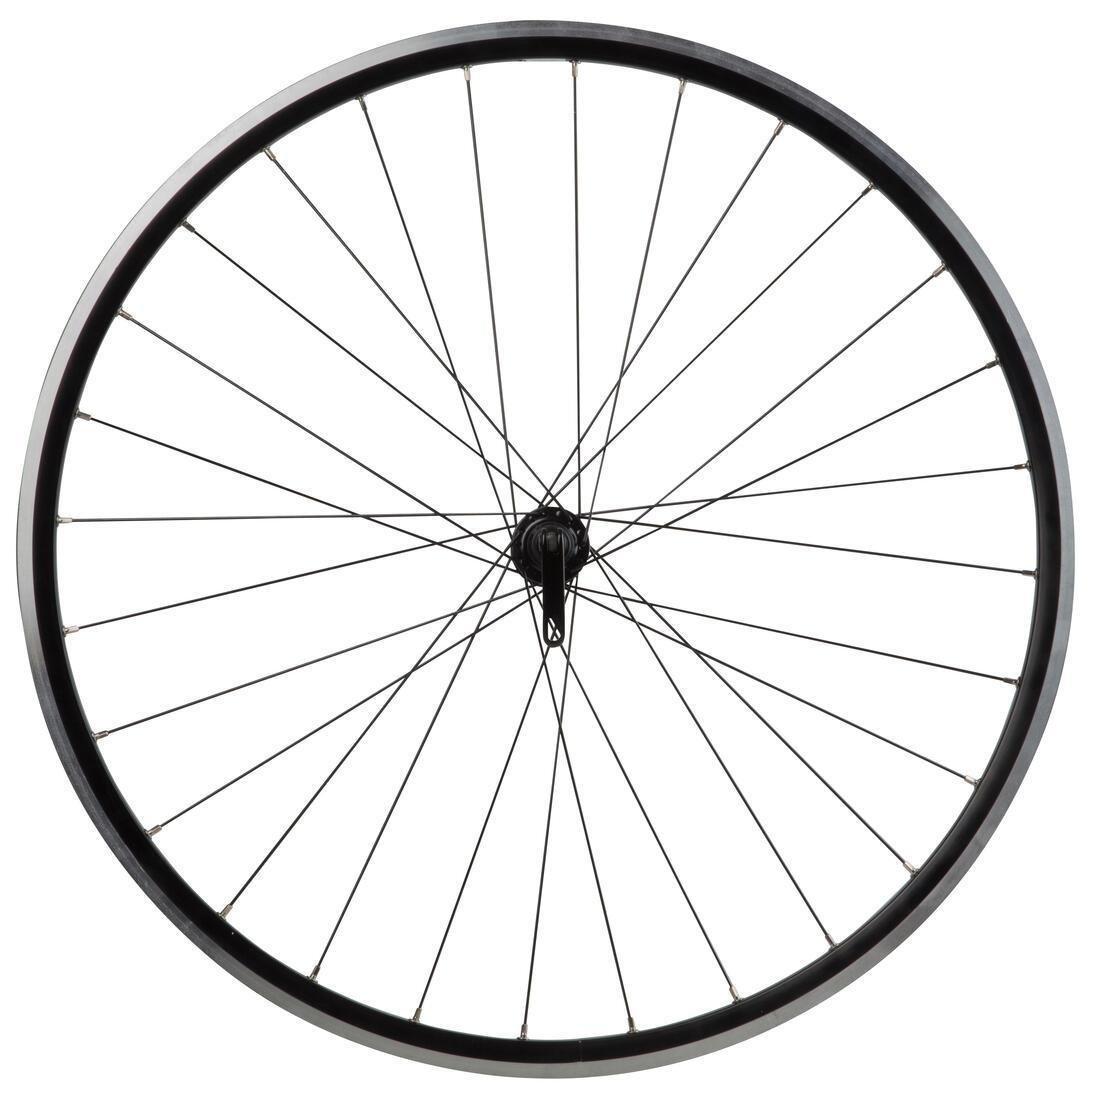 TRIBAN - Triban 100 700 Double-Walled Front Road Bike Wheel